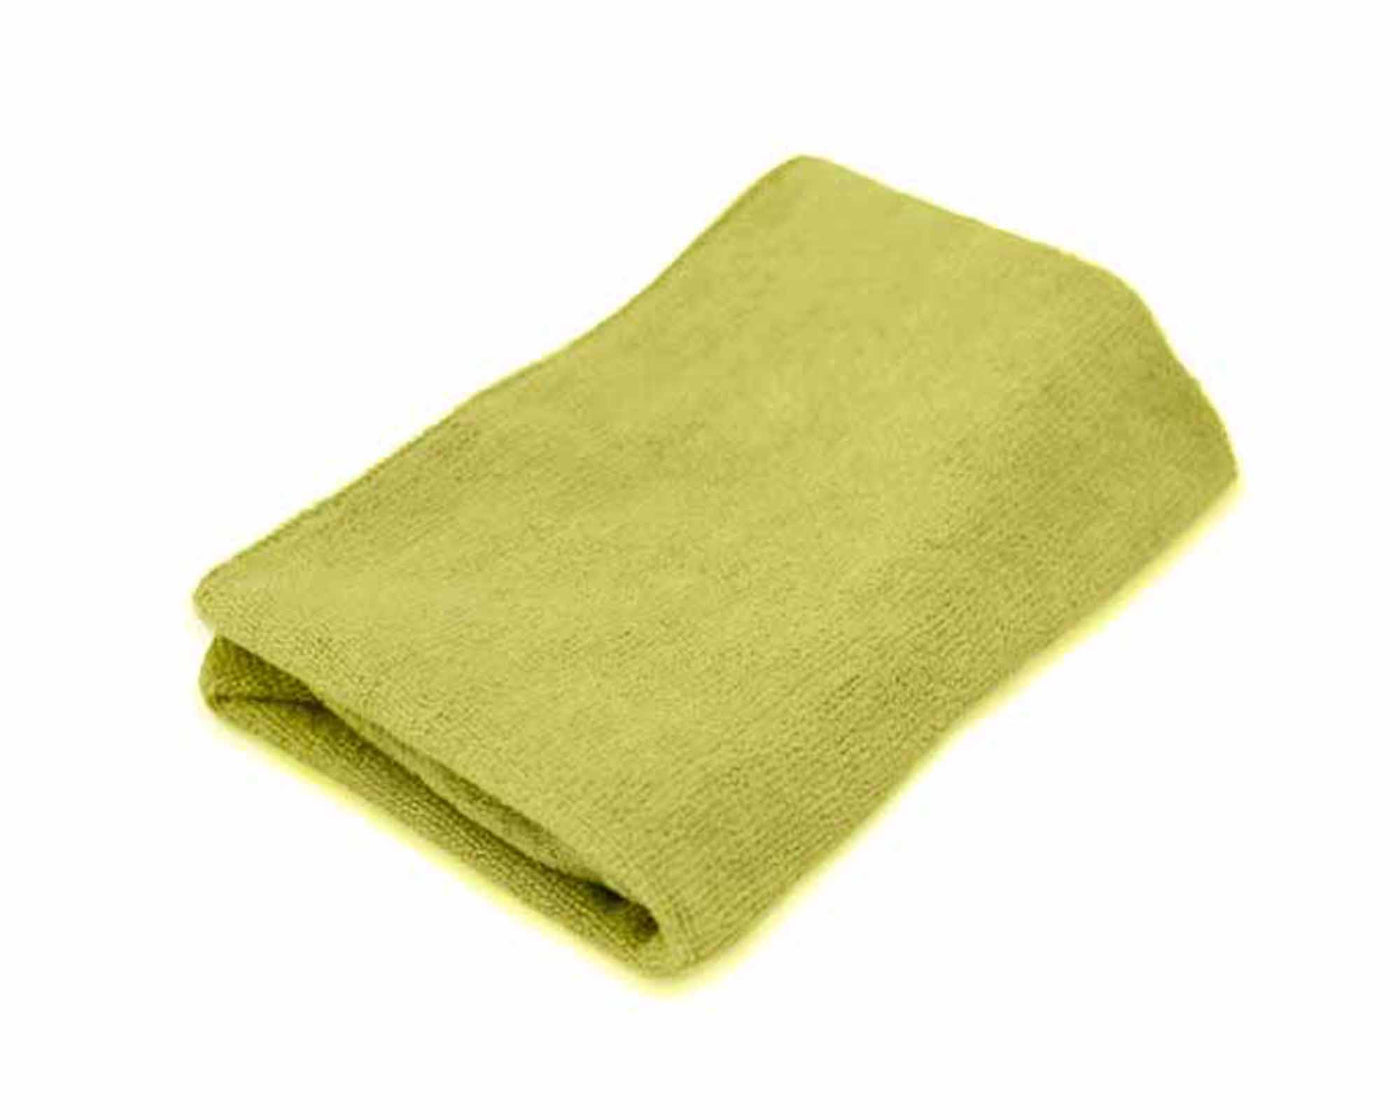 yellow colour premium grade microfiber towel